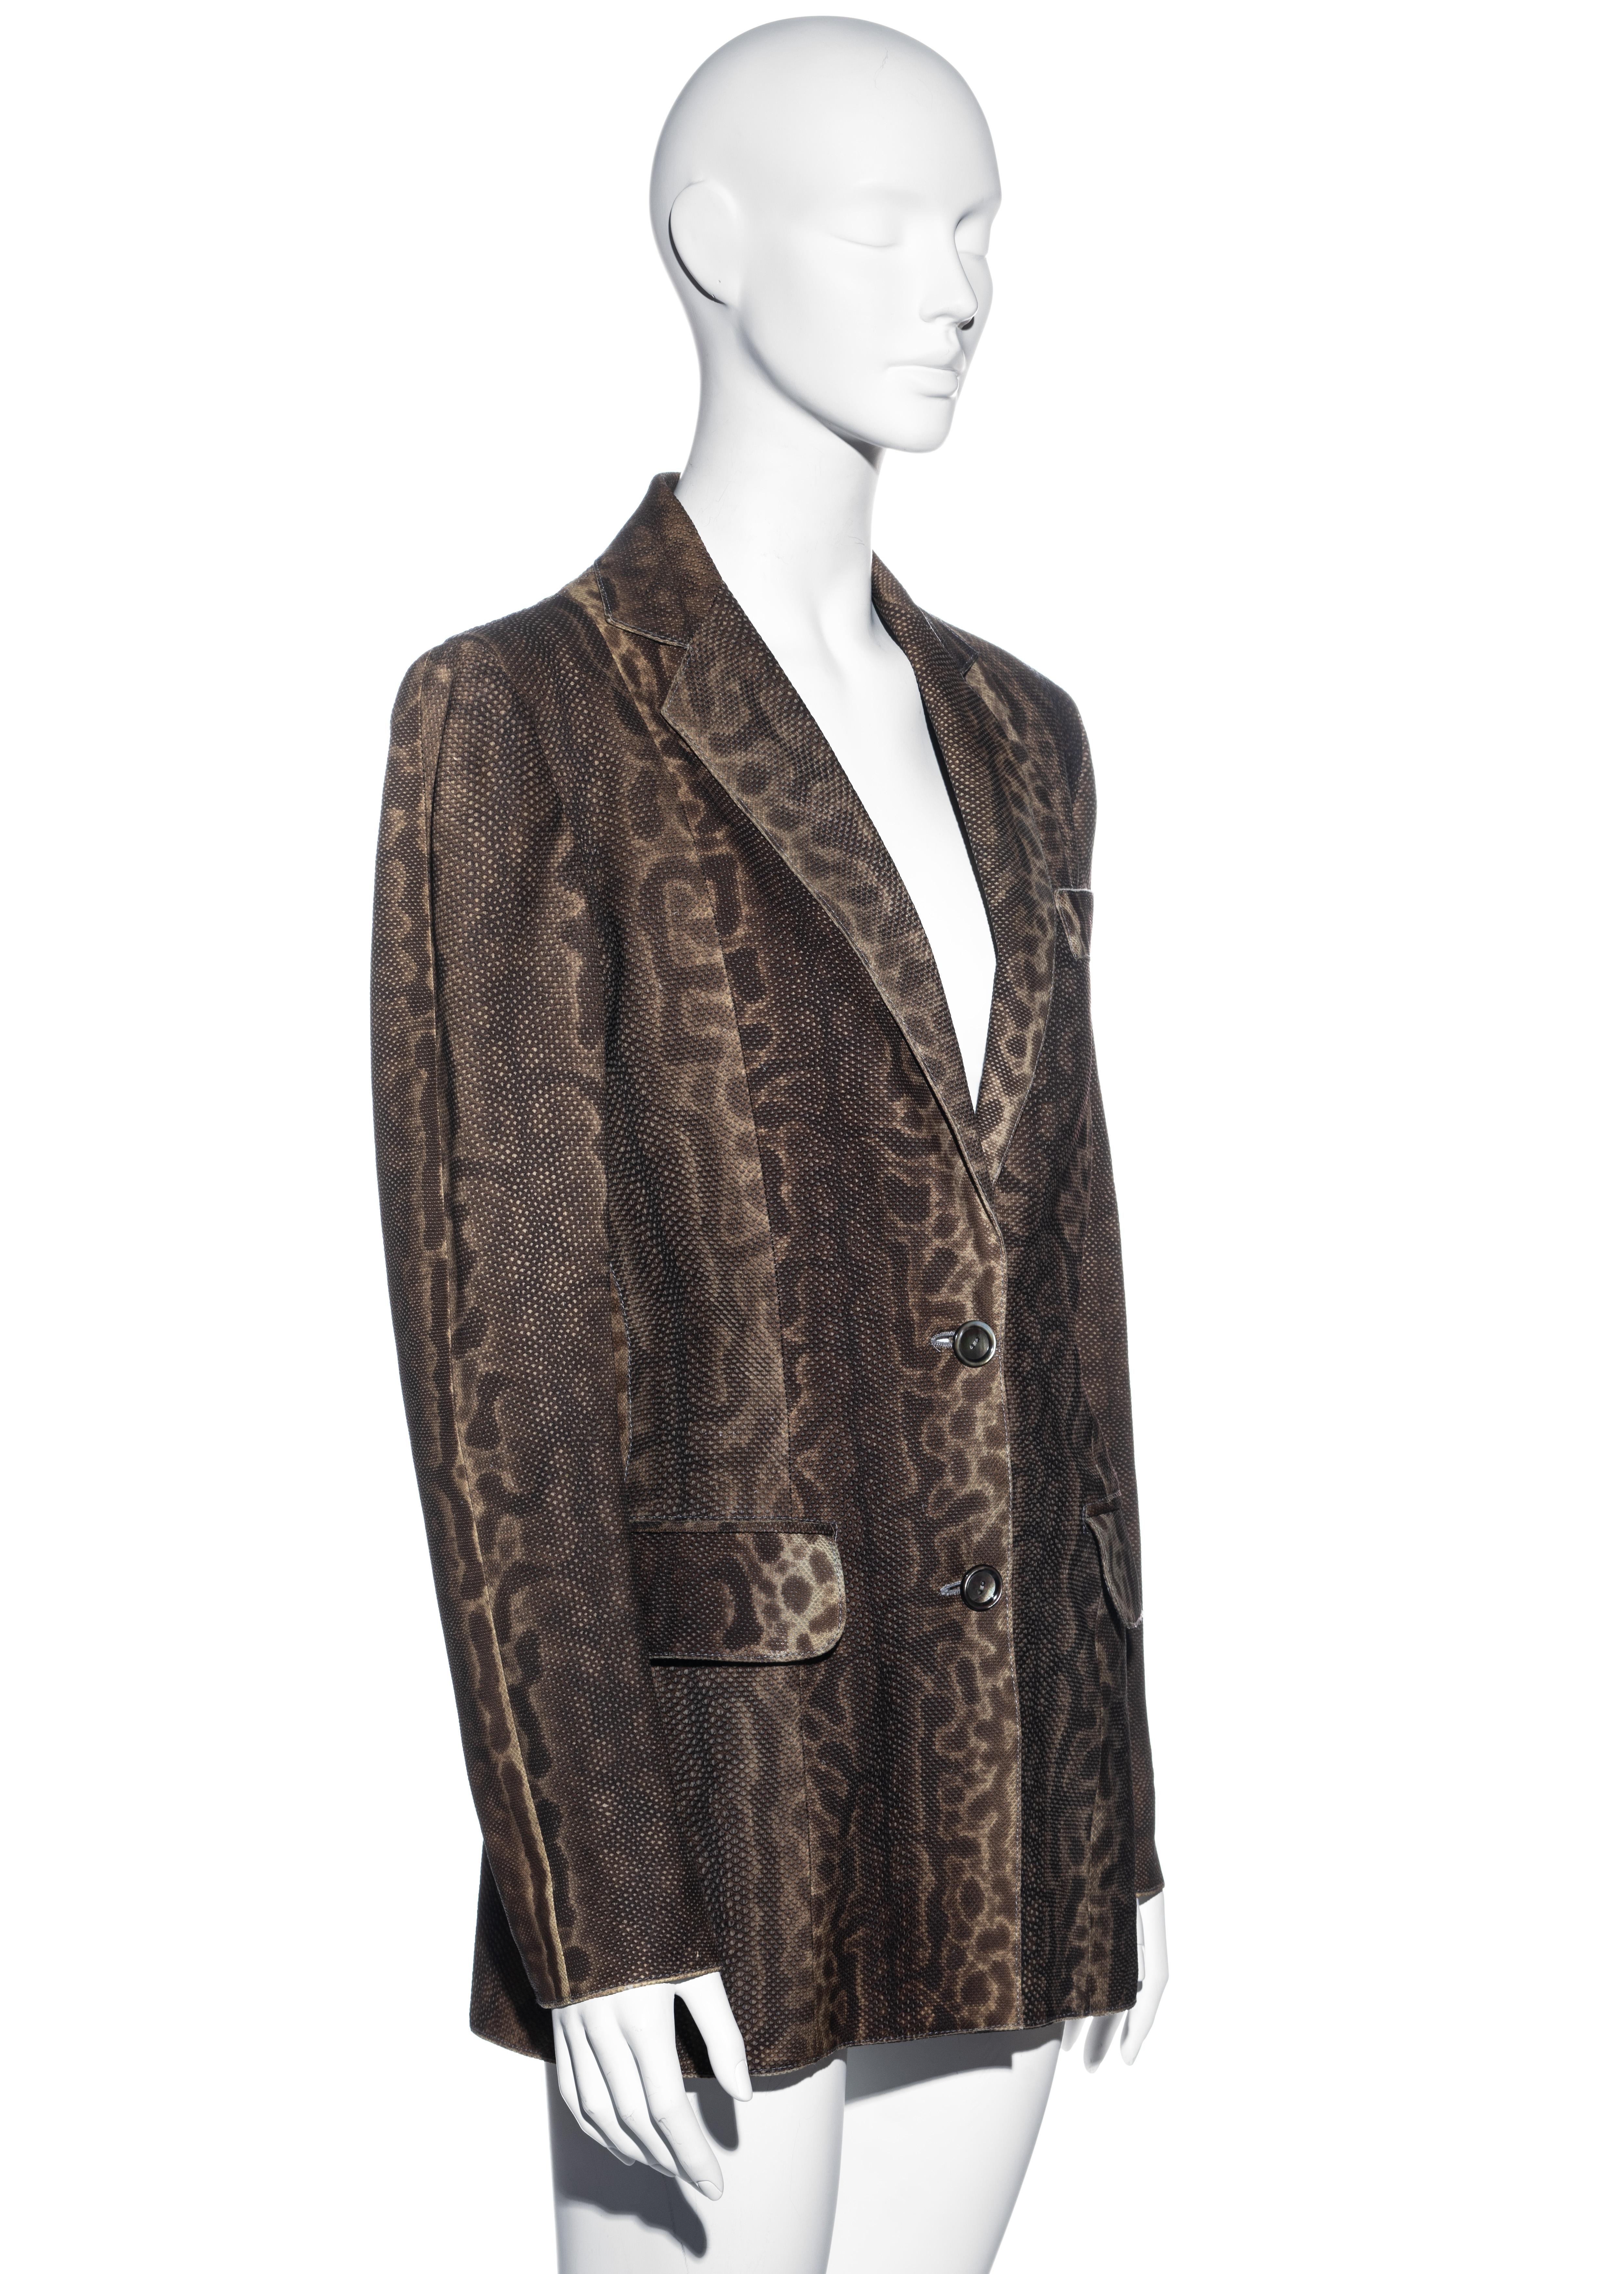 Black Christian Dior by John Galliano lizard skin blazer jacket, fw 2002 For Sale